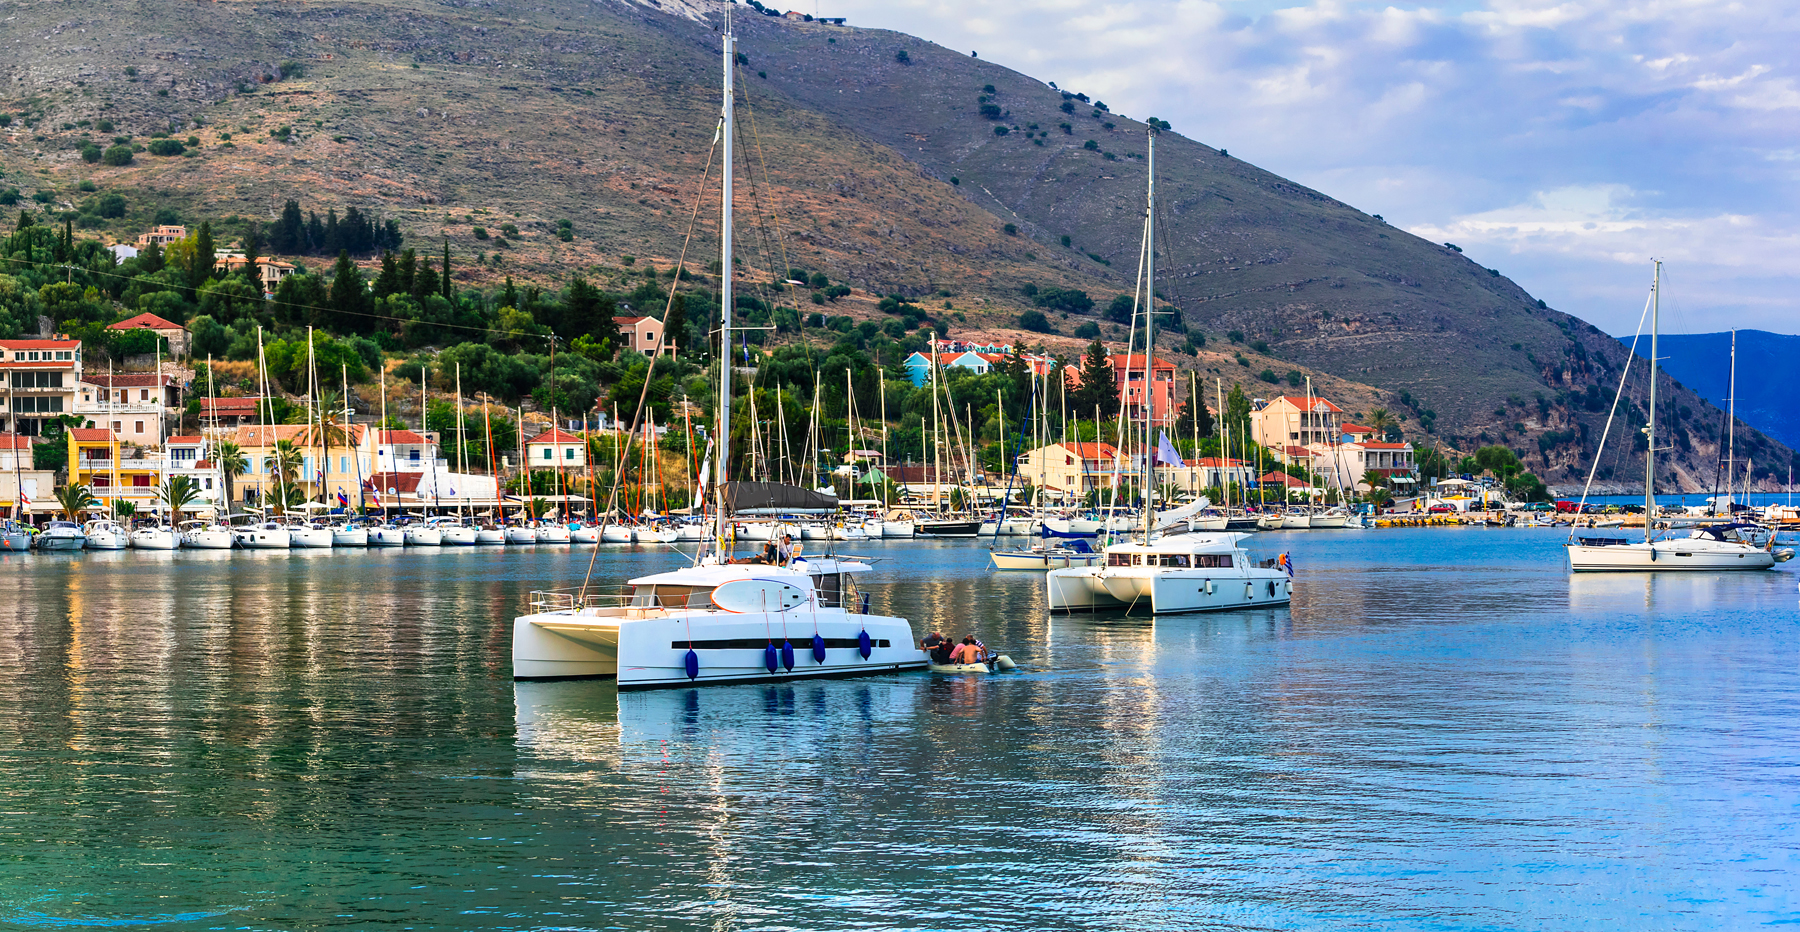 Ionian Sea yacht rental service